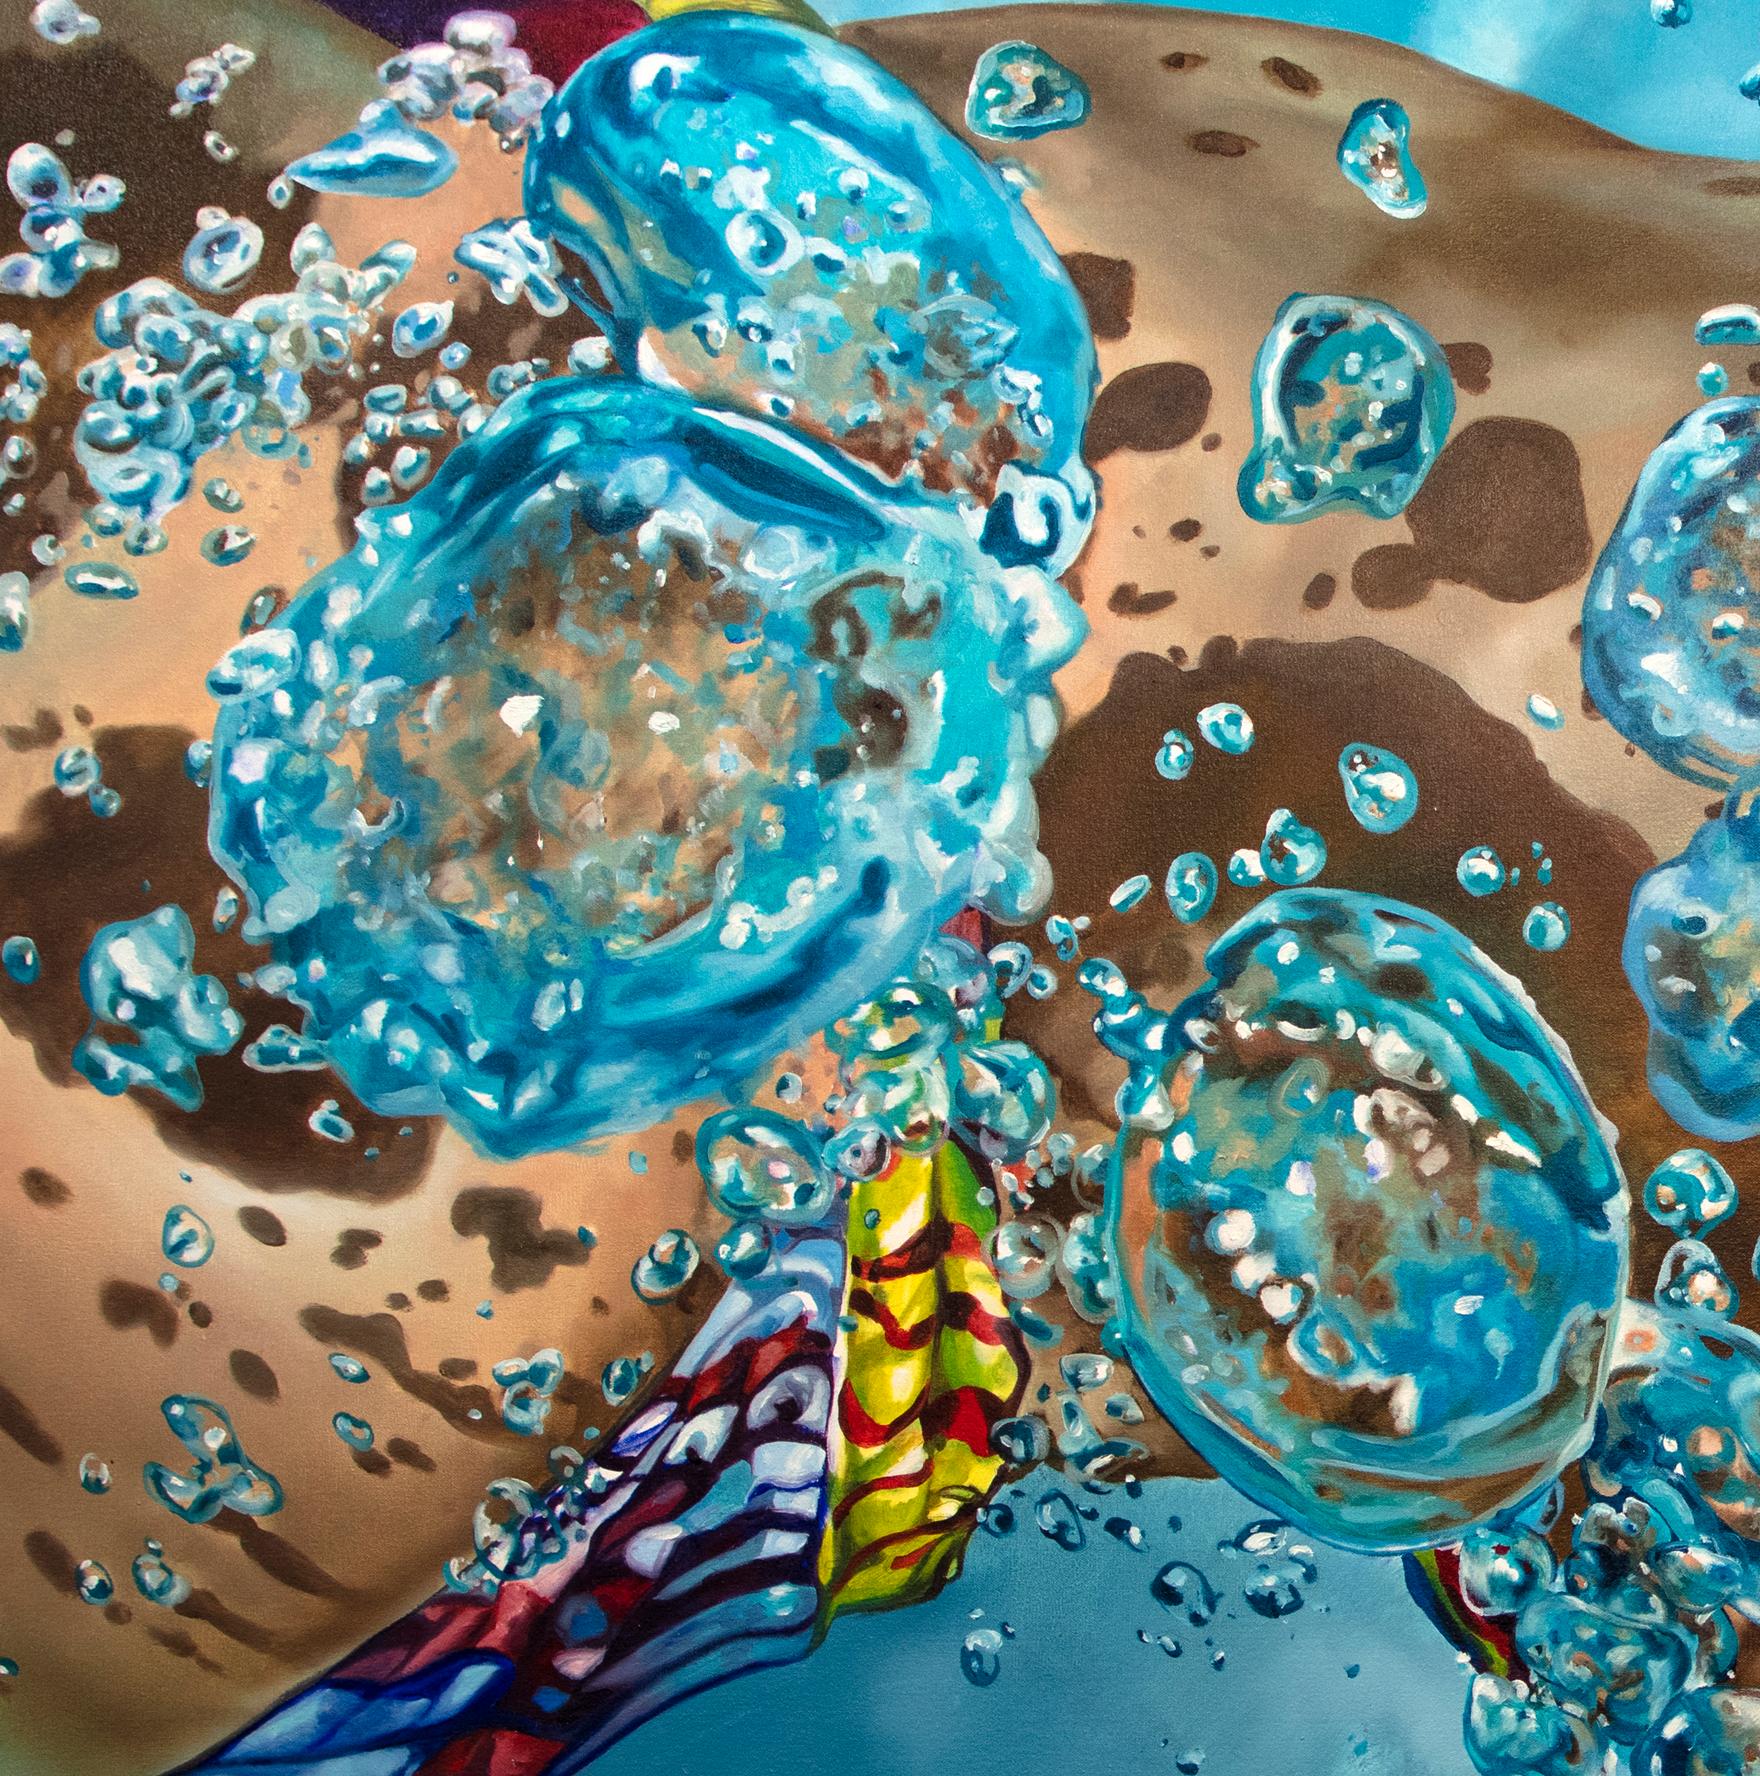 EPHEMERA I, Swimmer, Blue Water, Pool, Bubbles, Female Form - Painting by Eric Zener